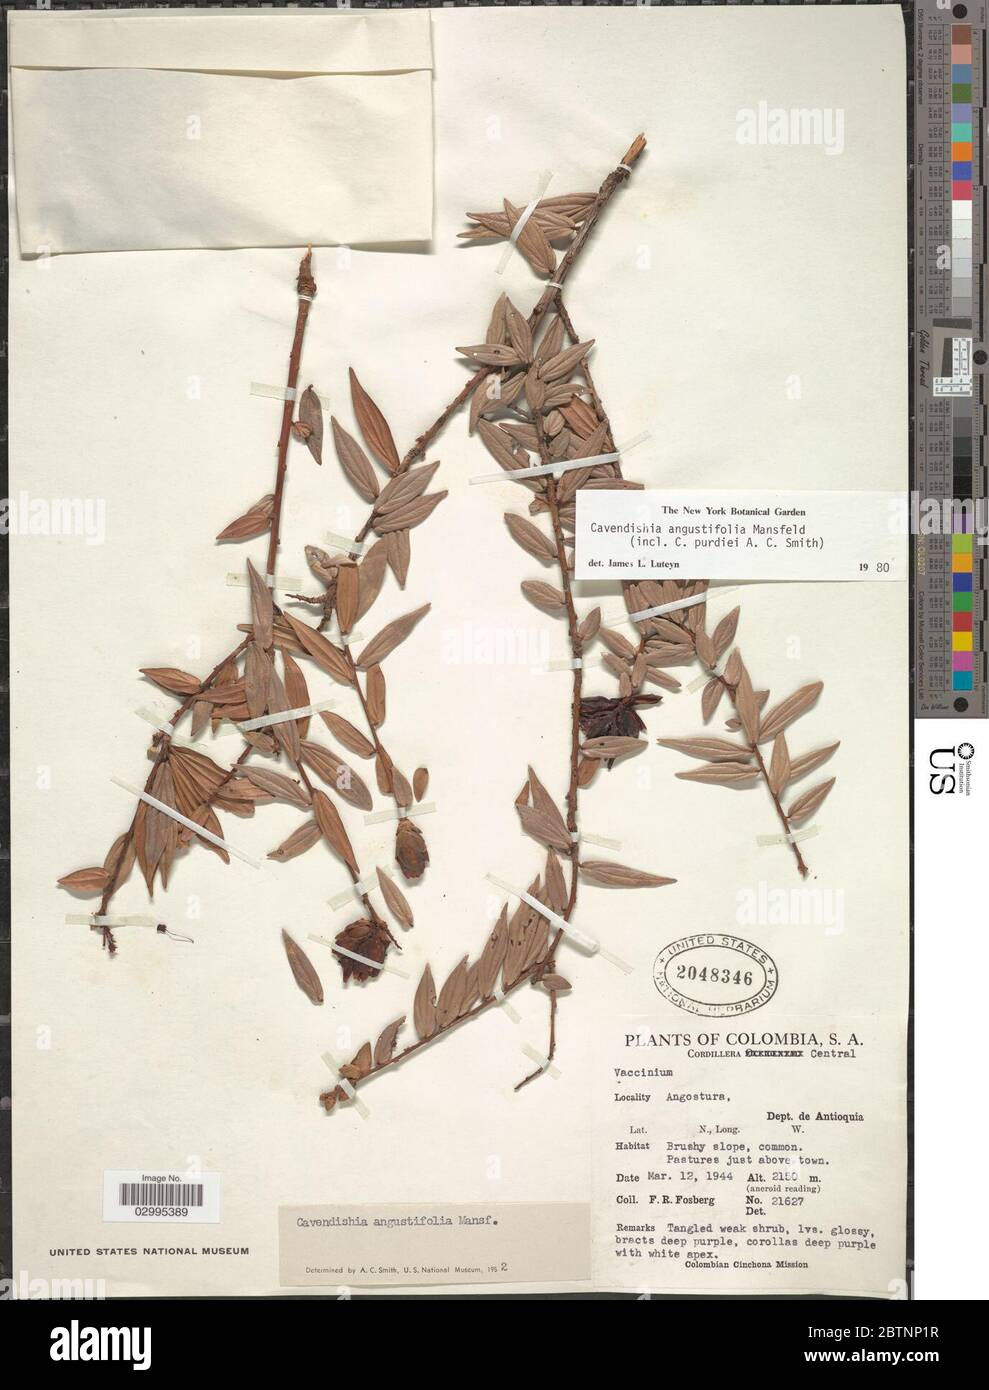 Cavendishia angustifolia Mansf. Stock Photo